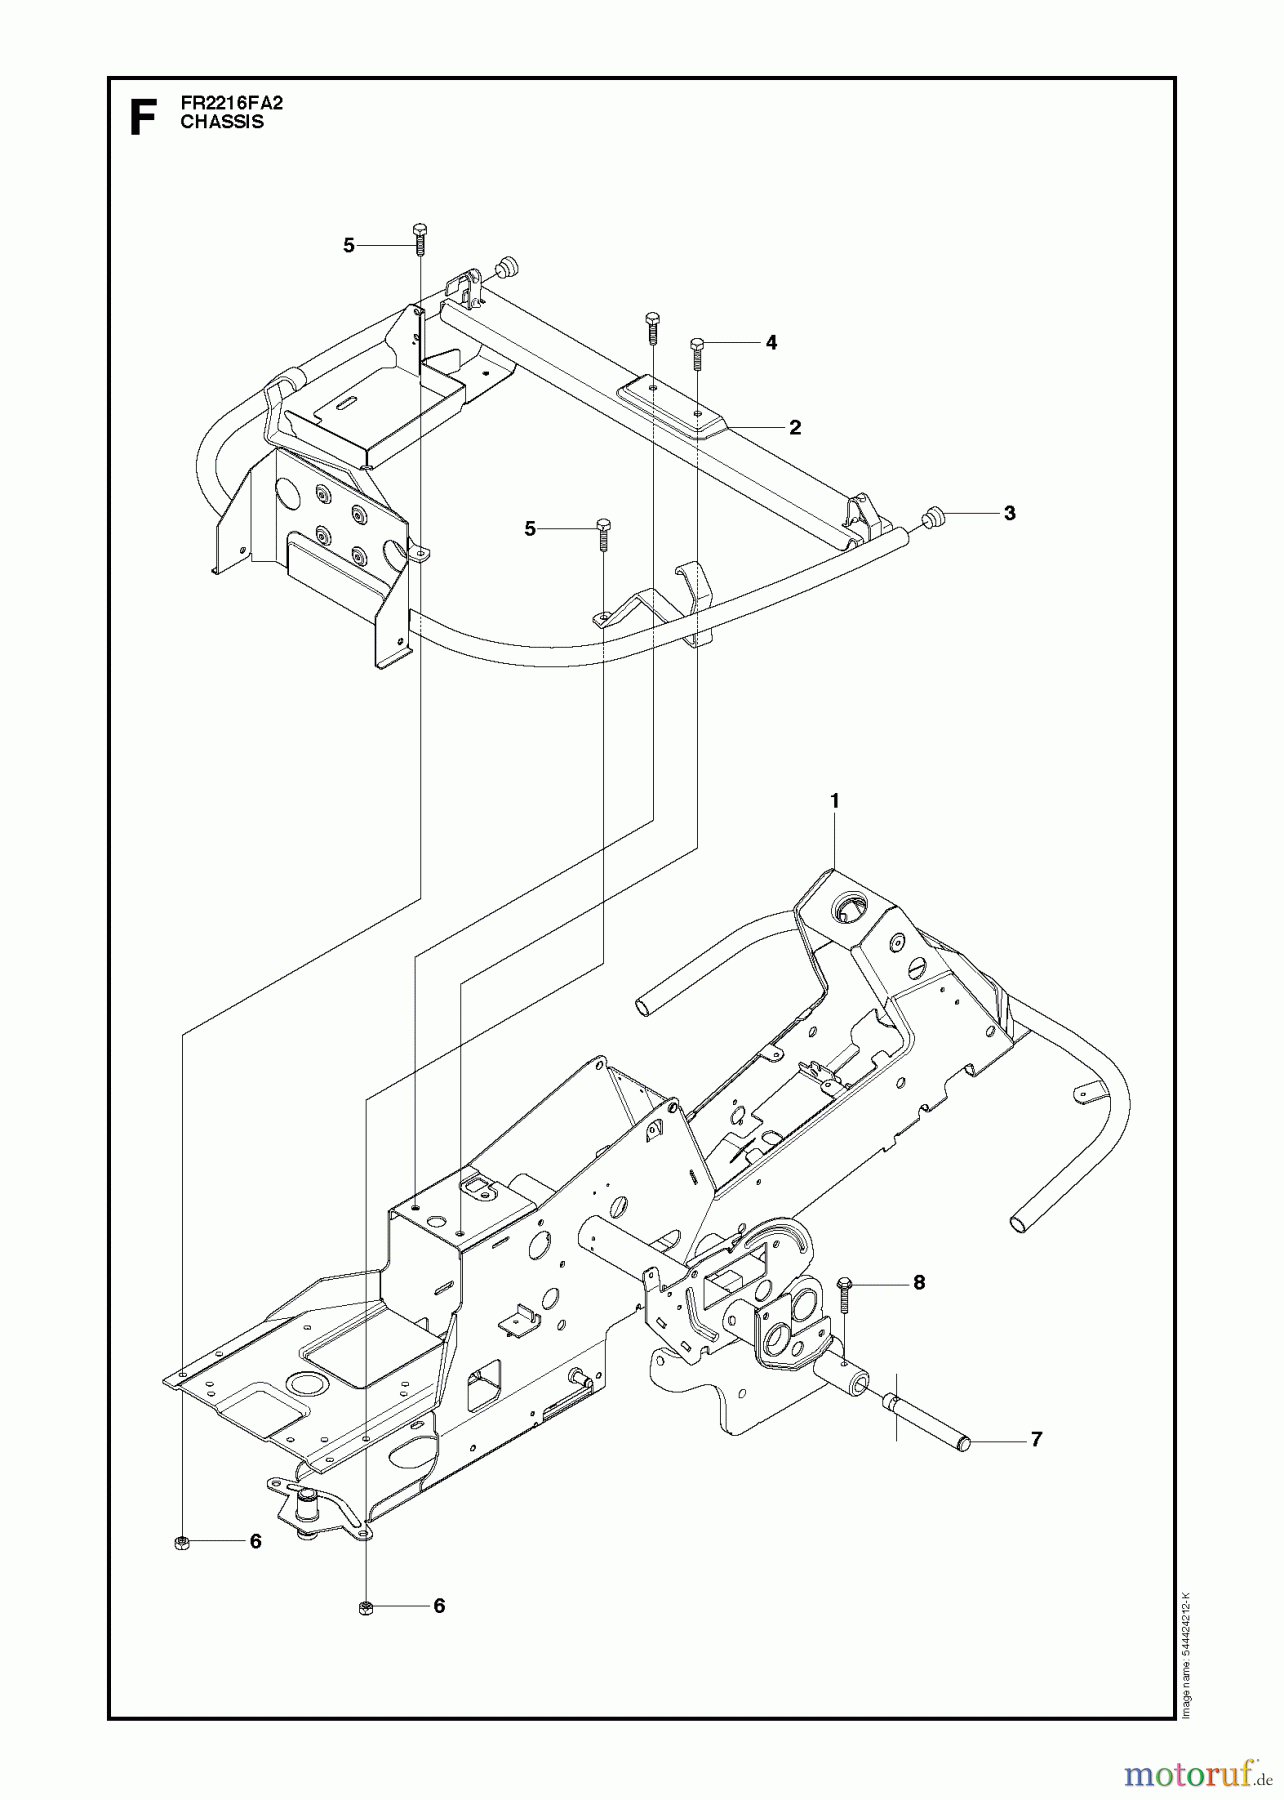  Jonsered Reitermäher FR2216 FA2 (966415101) - Jonsered Rear-Engine Riding Mower (2010-03) CHASSIS / FRAME